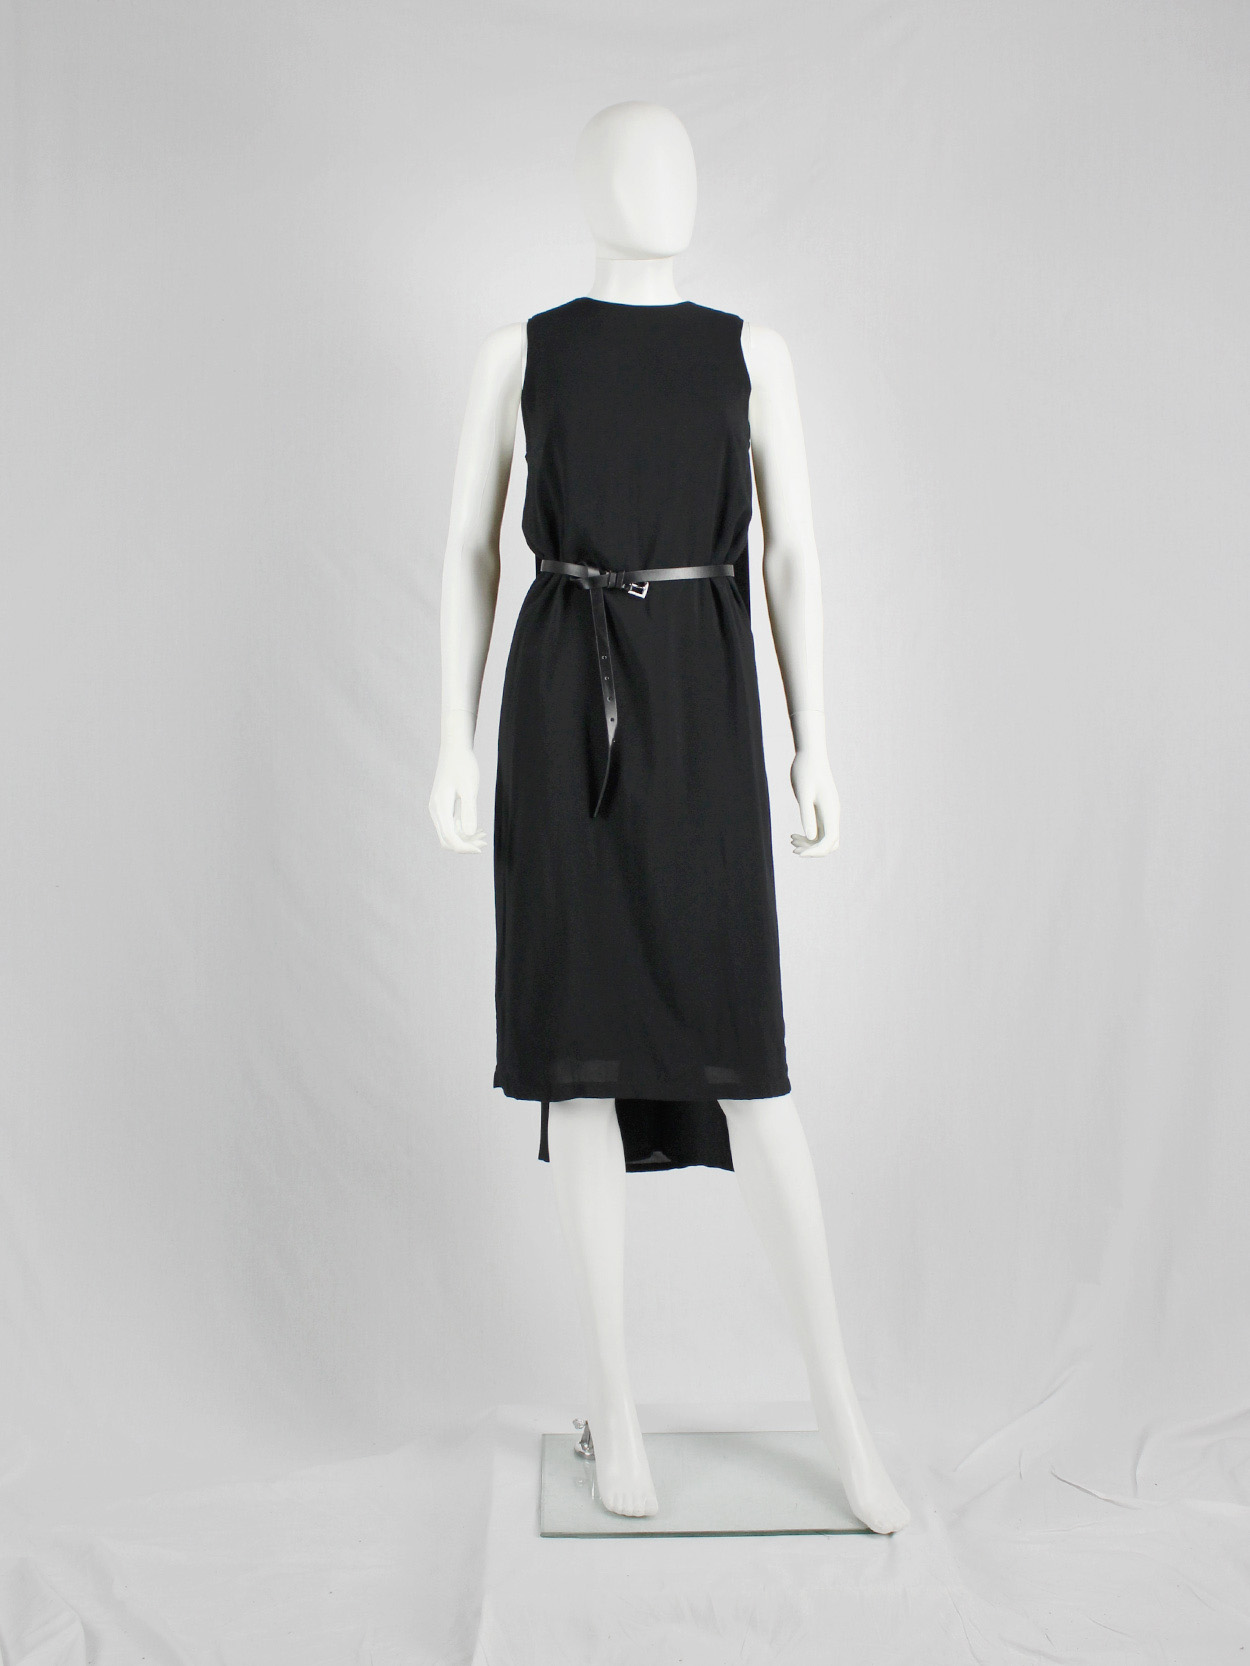 vaniitas Ann Demeulemeester black dress with cape — spring 2013 6069